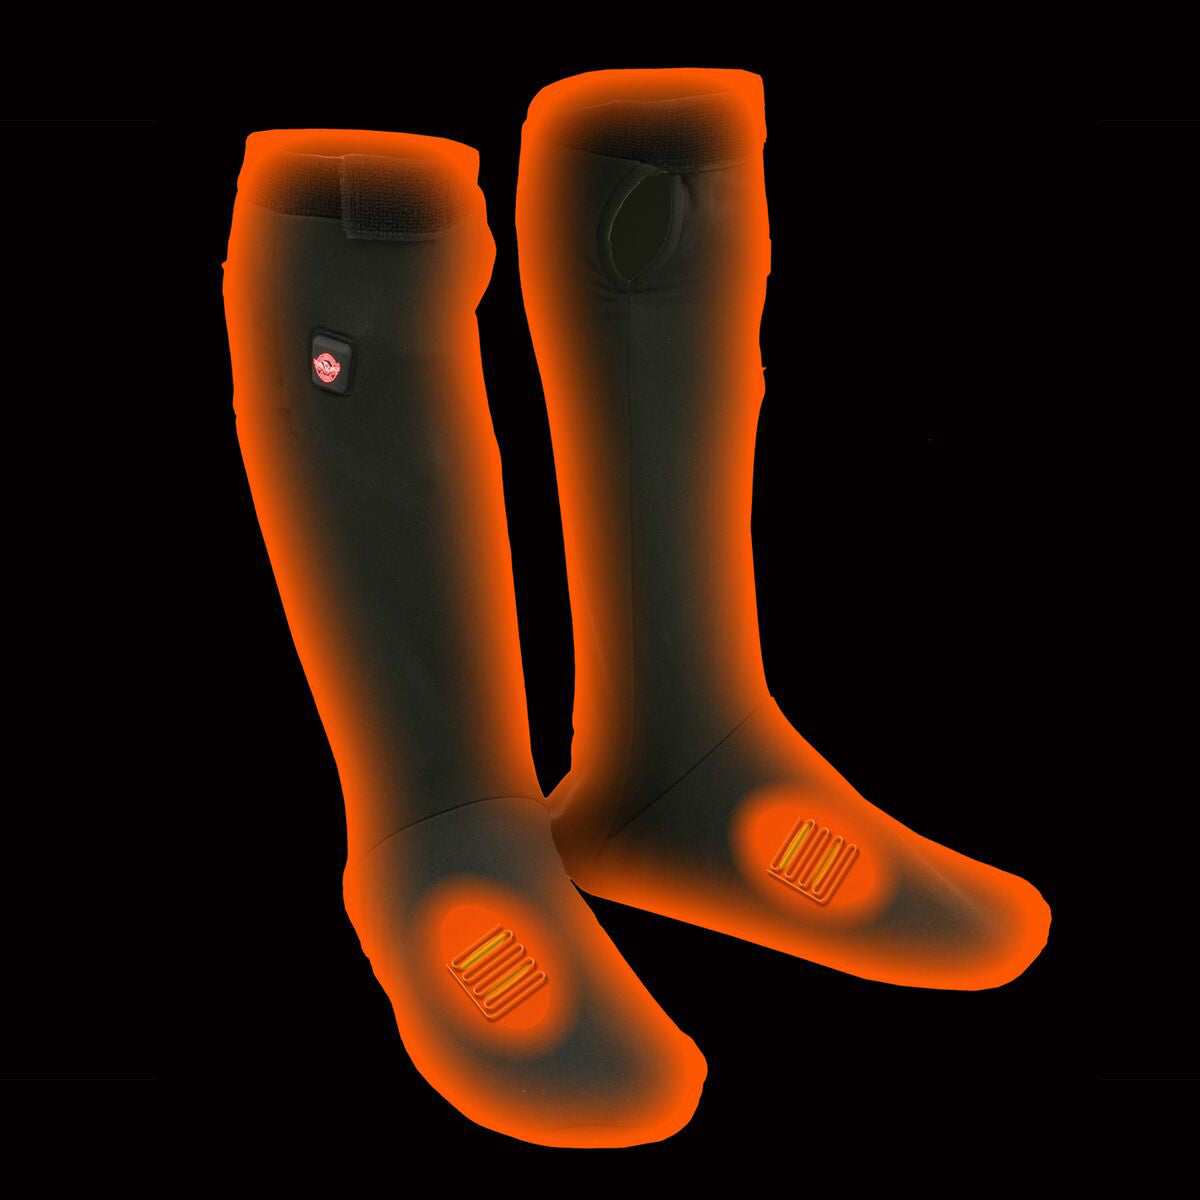 Nexgen Heat MP7906 Men's Black 'Heated' Sock Liners with Top and Bottom Heating Elements